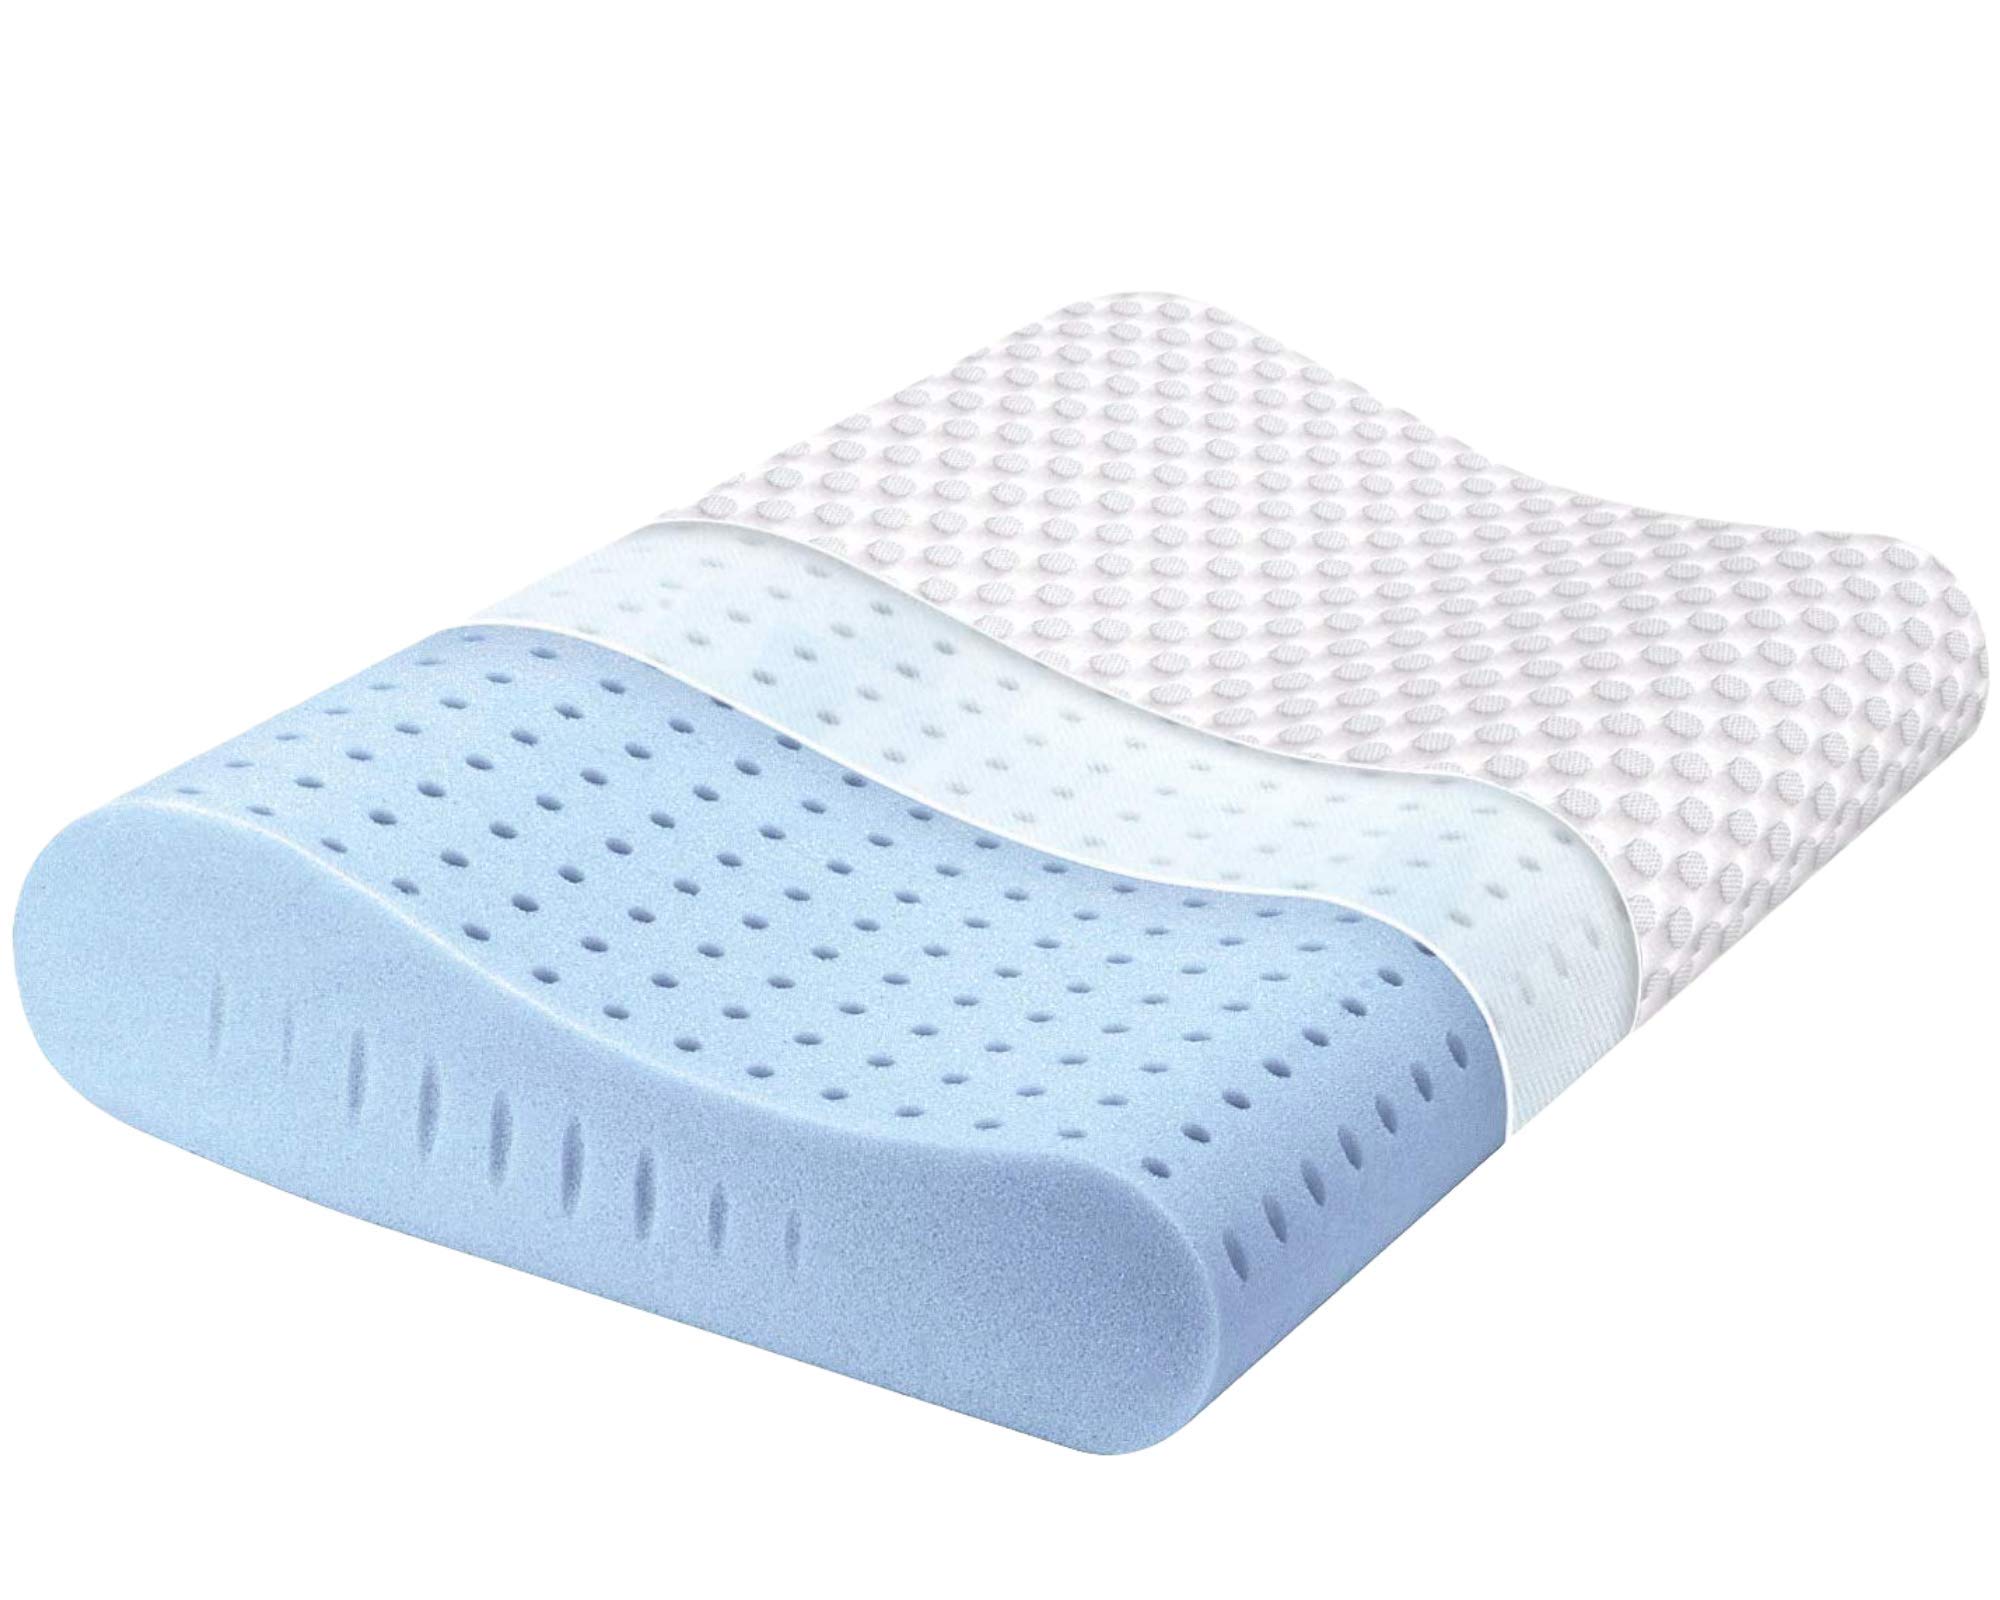 milemont memory foam mattress